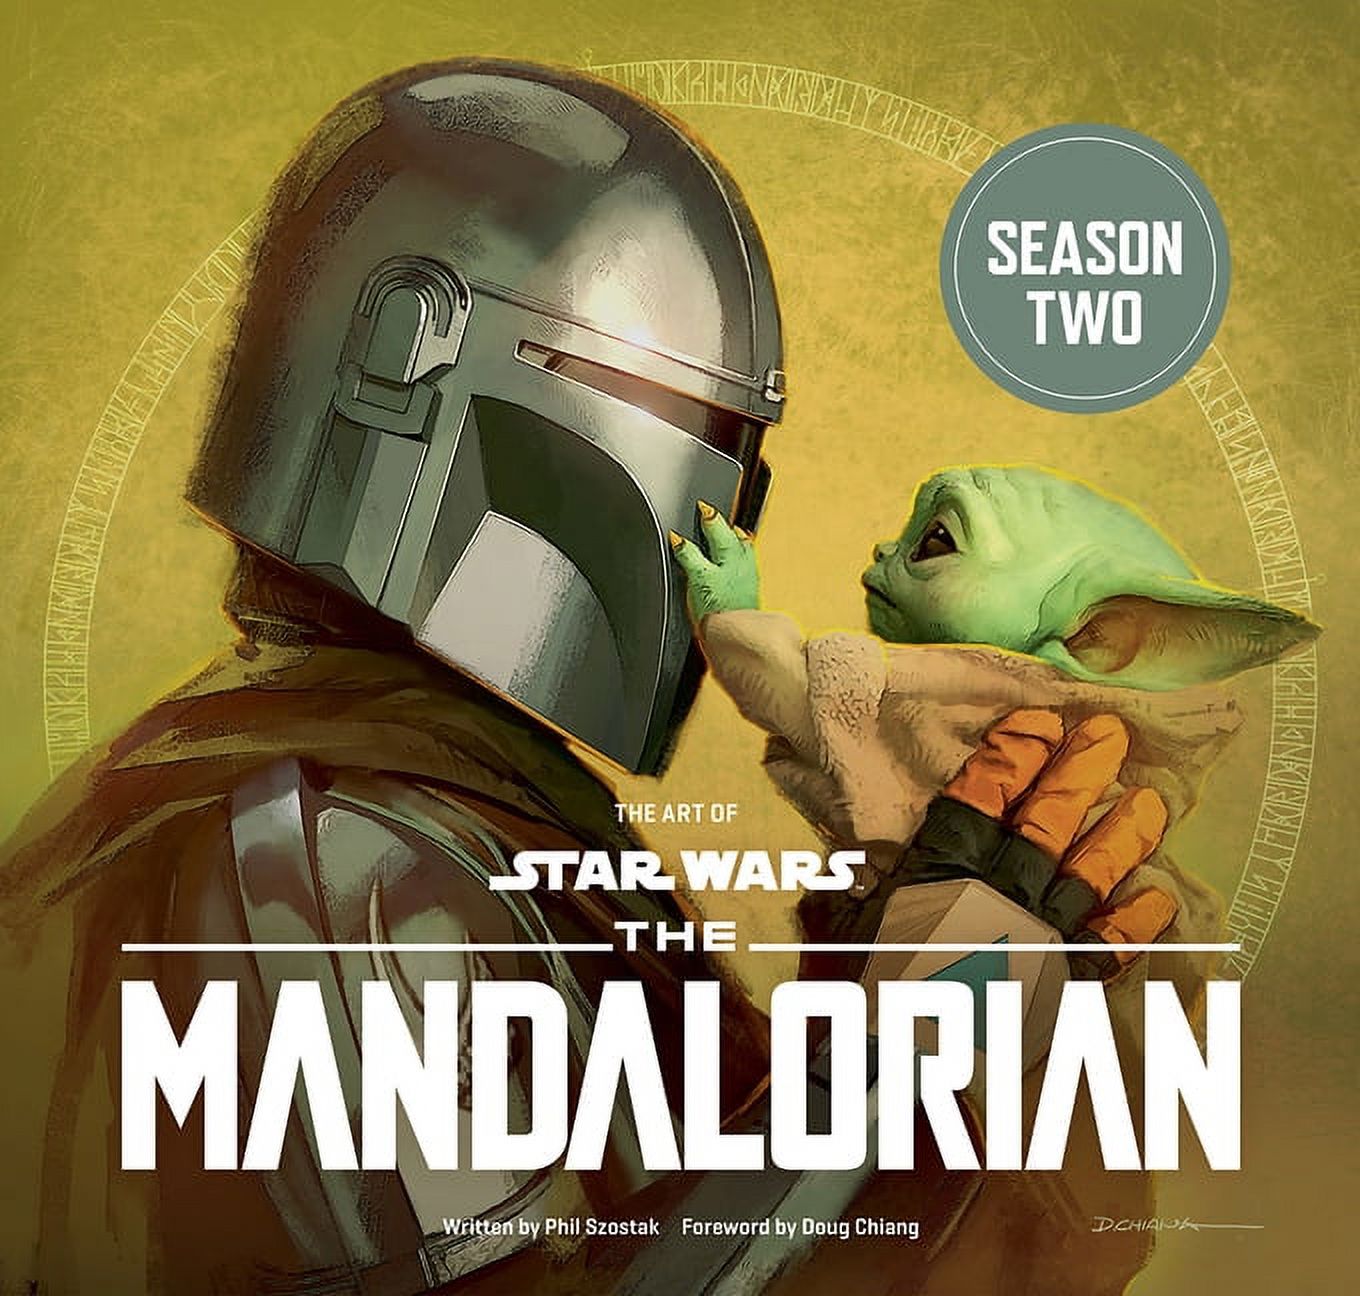 The Art of Star Wars: The Mandalorian (Season Two) (Hardcover) - image 1 of 1